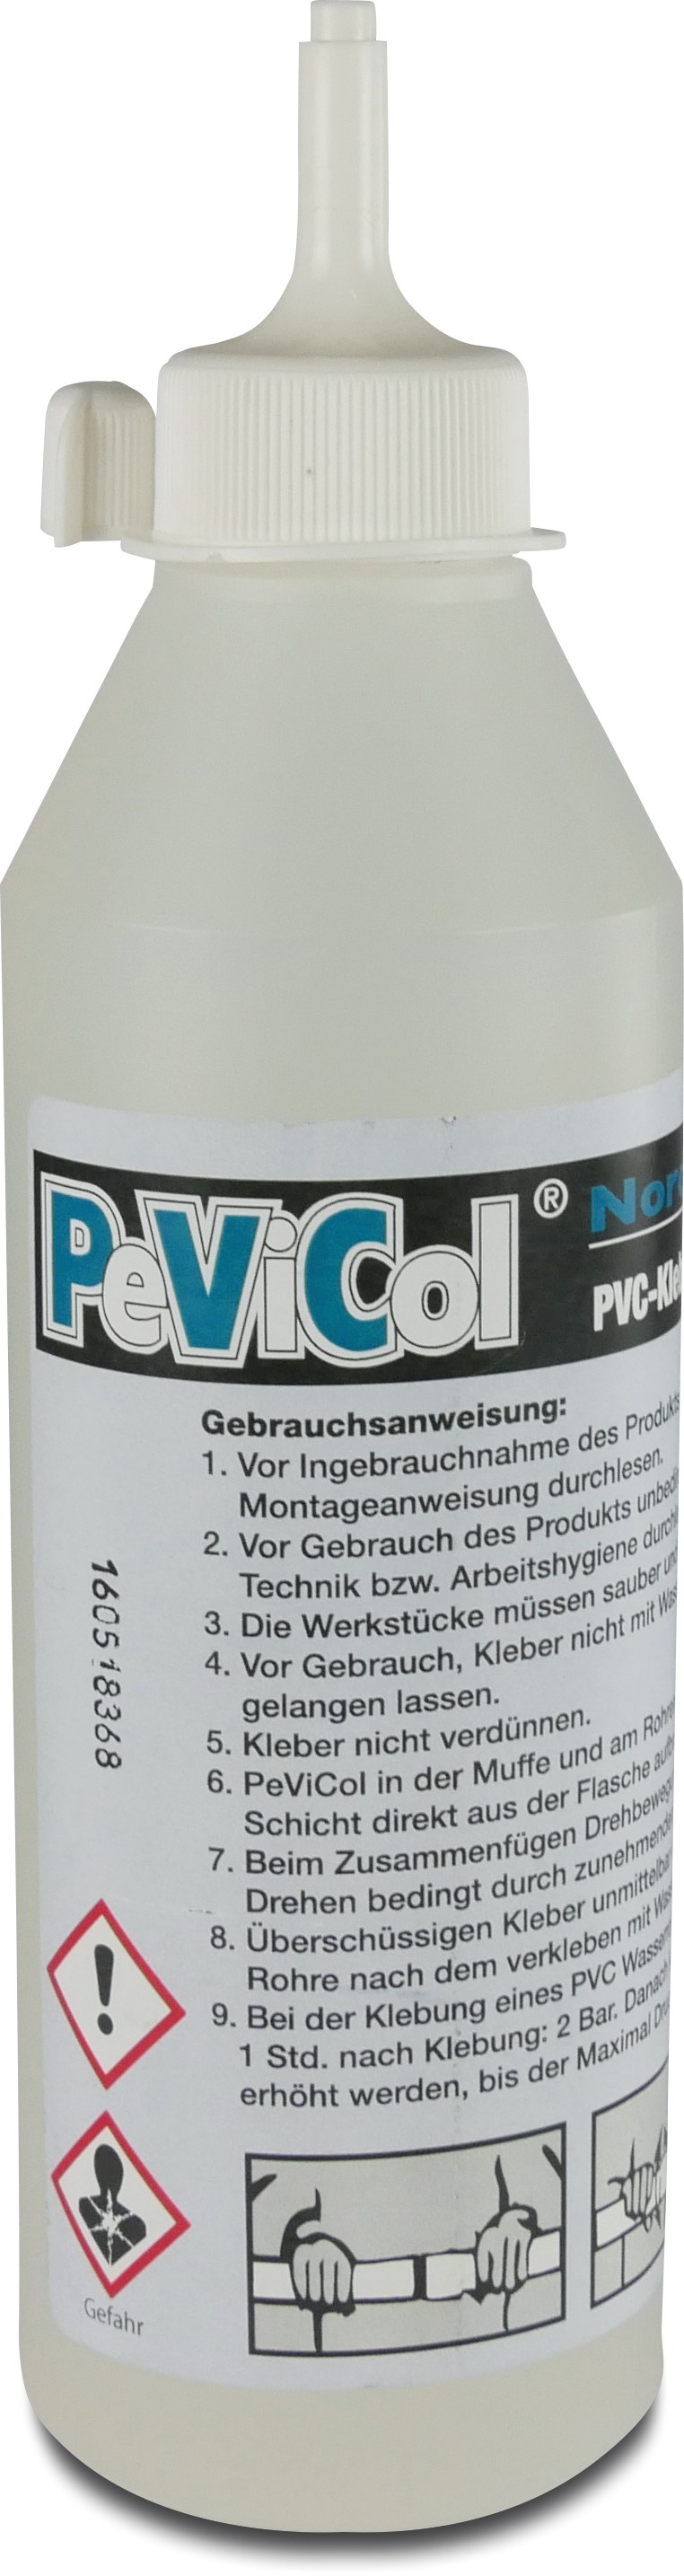 PVC glue 570g tube type PeViCol